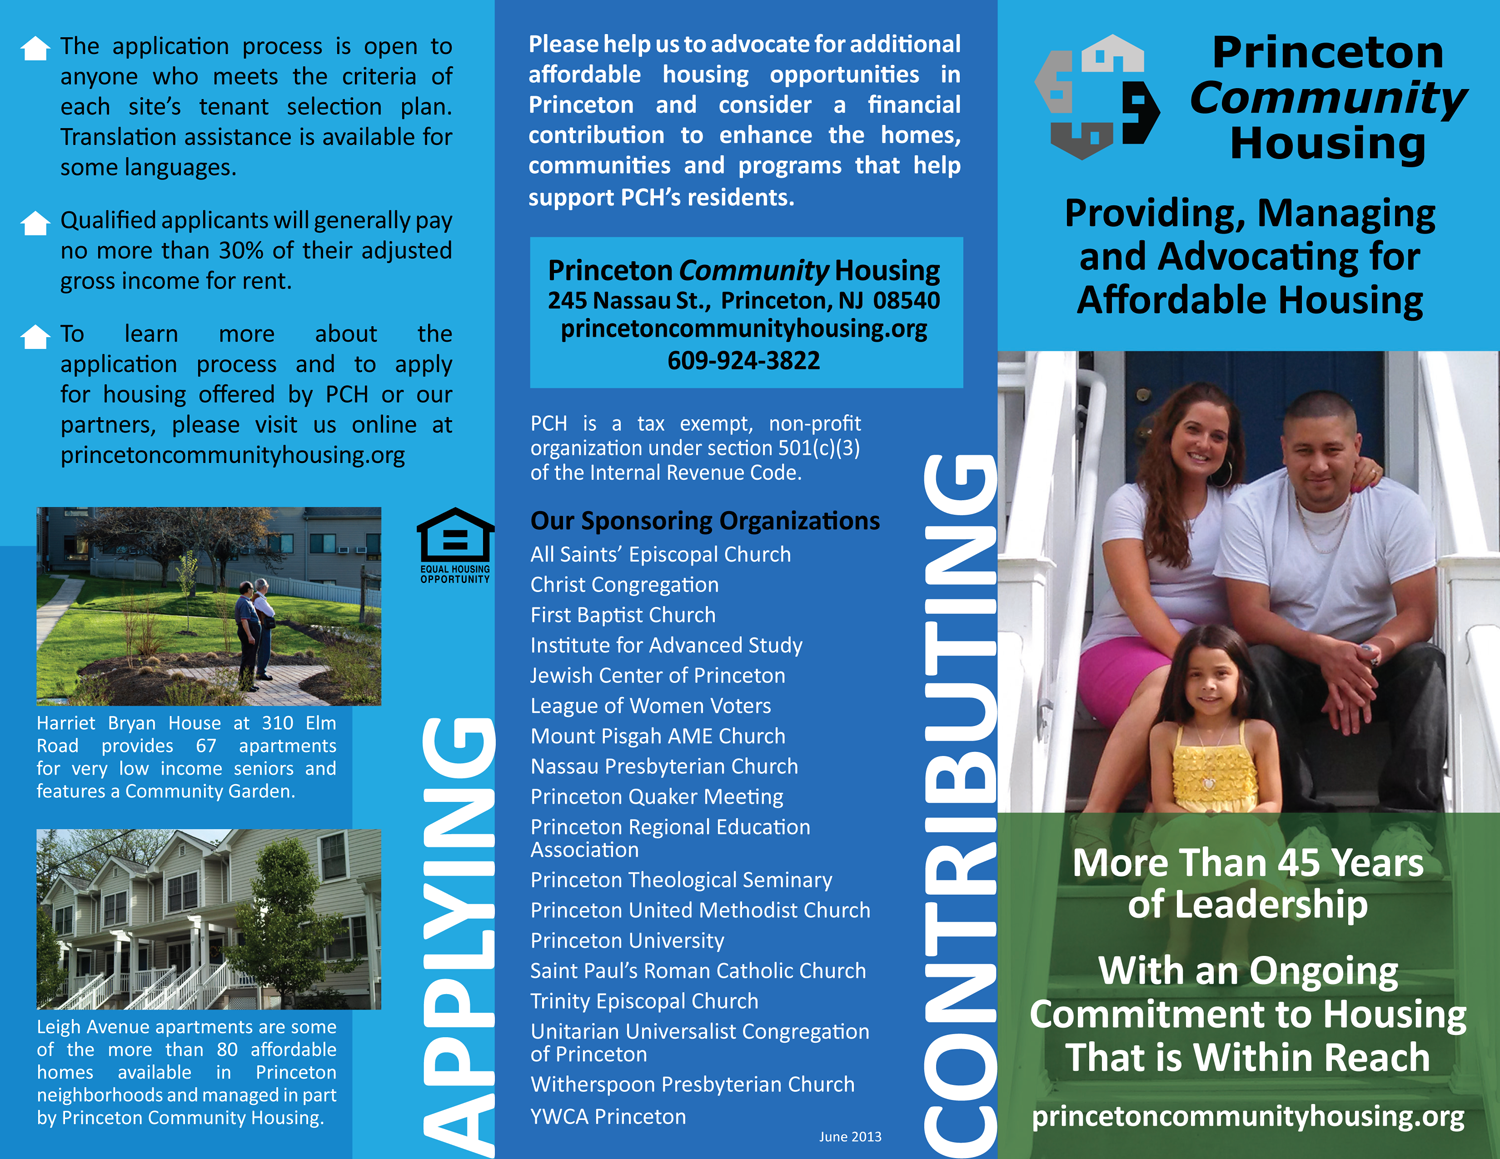 Princeton Community Housing